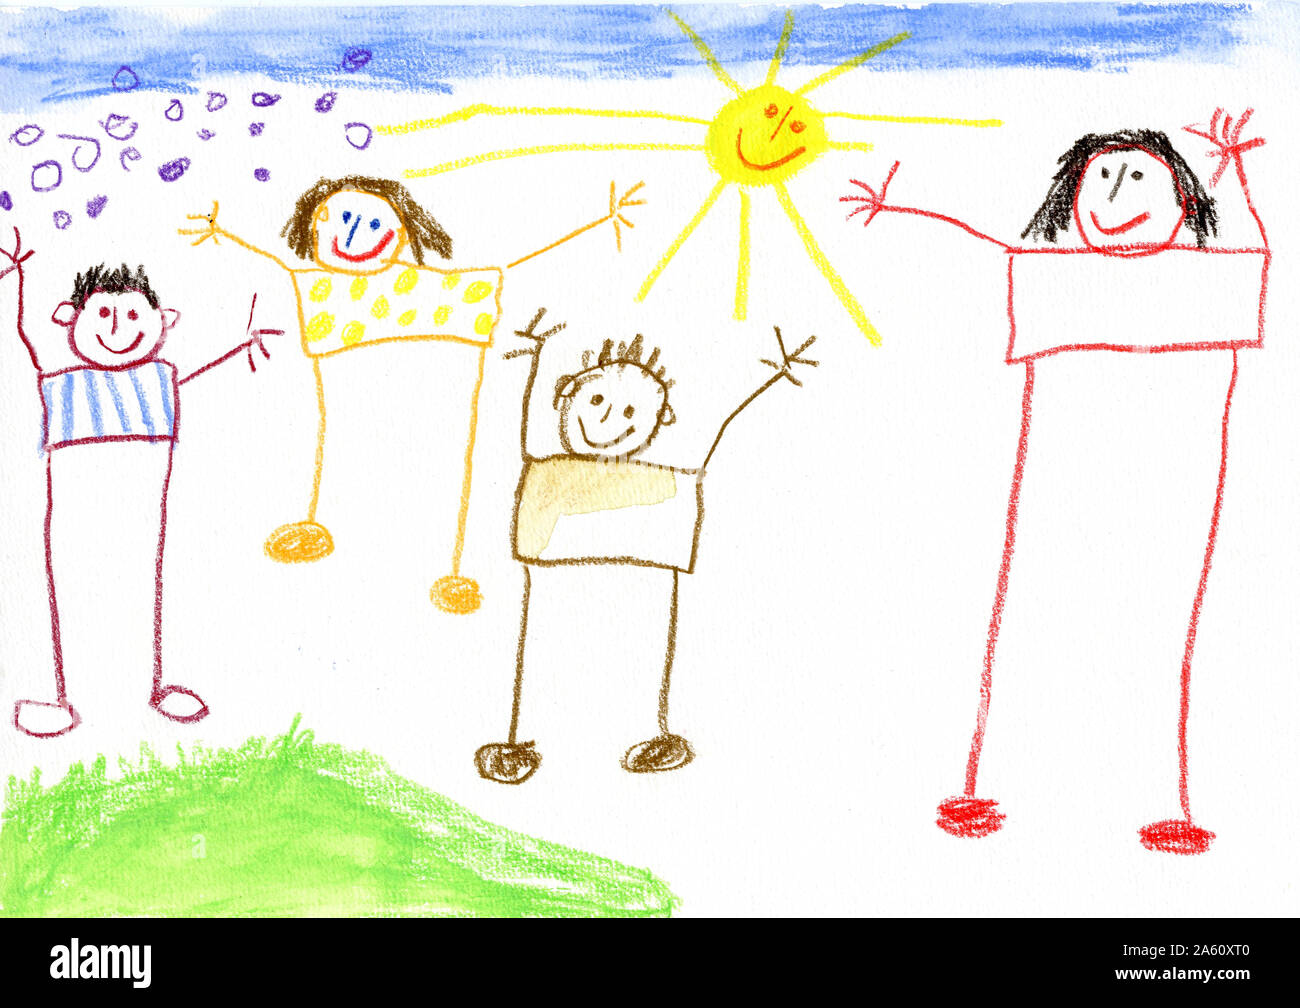 https://c8.alamy.com/comp/2A60XT0/childrens-drawing-happy-family-2A60XT0.jpg